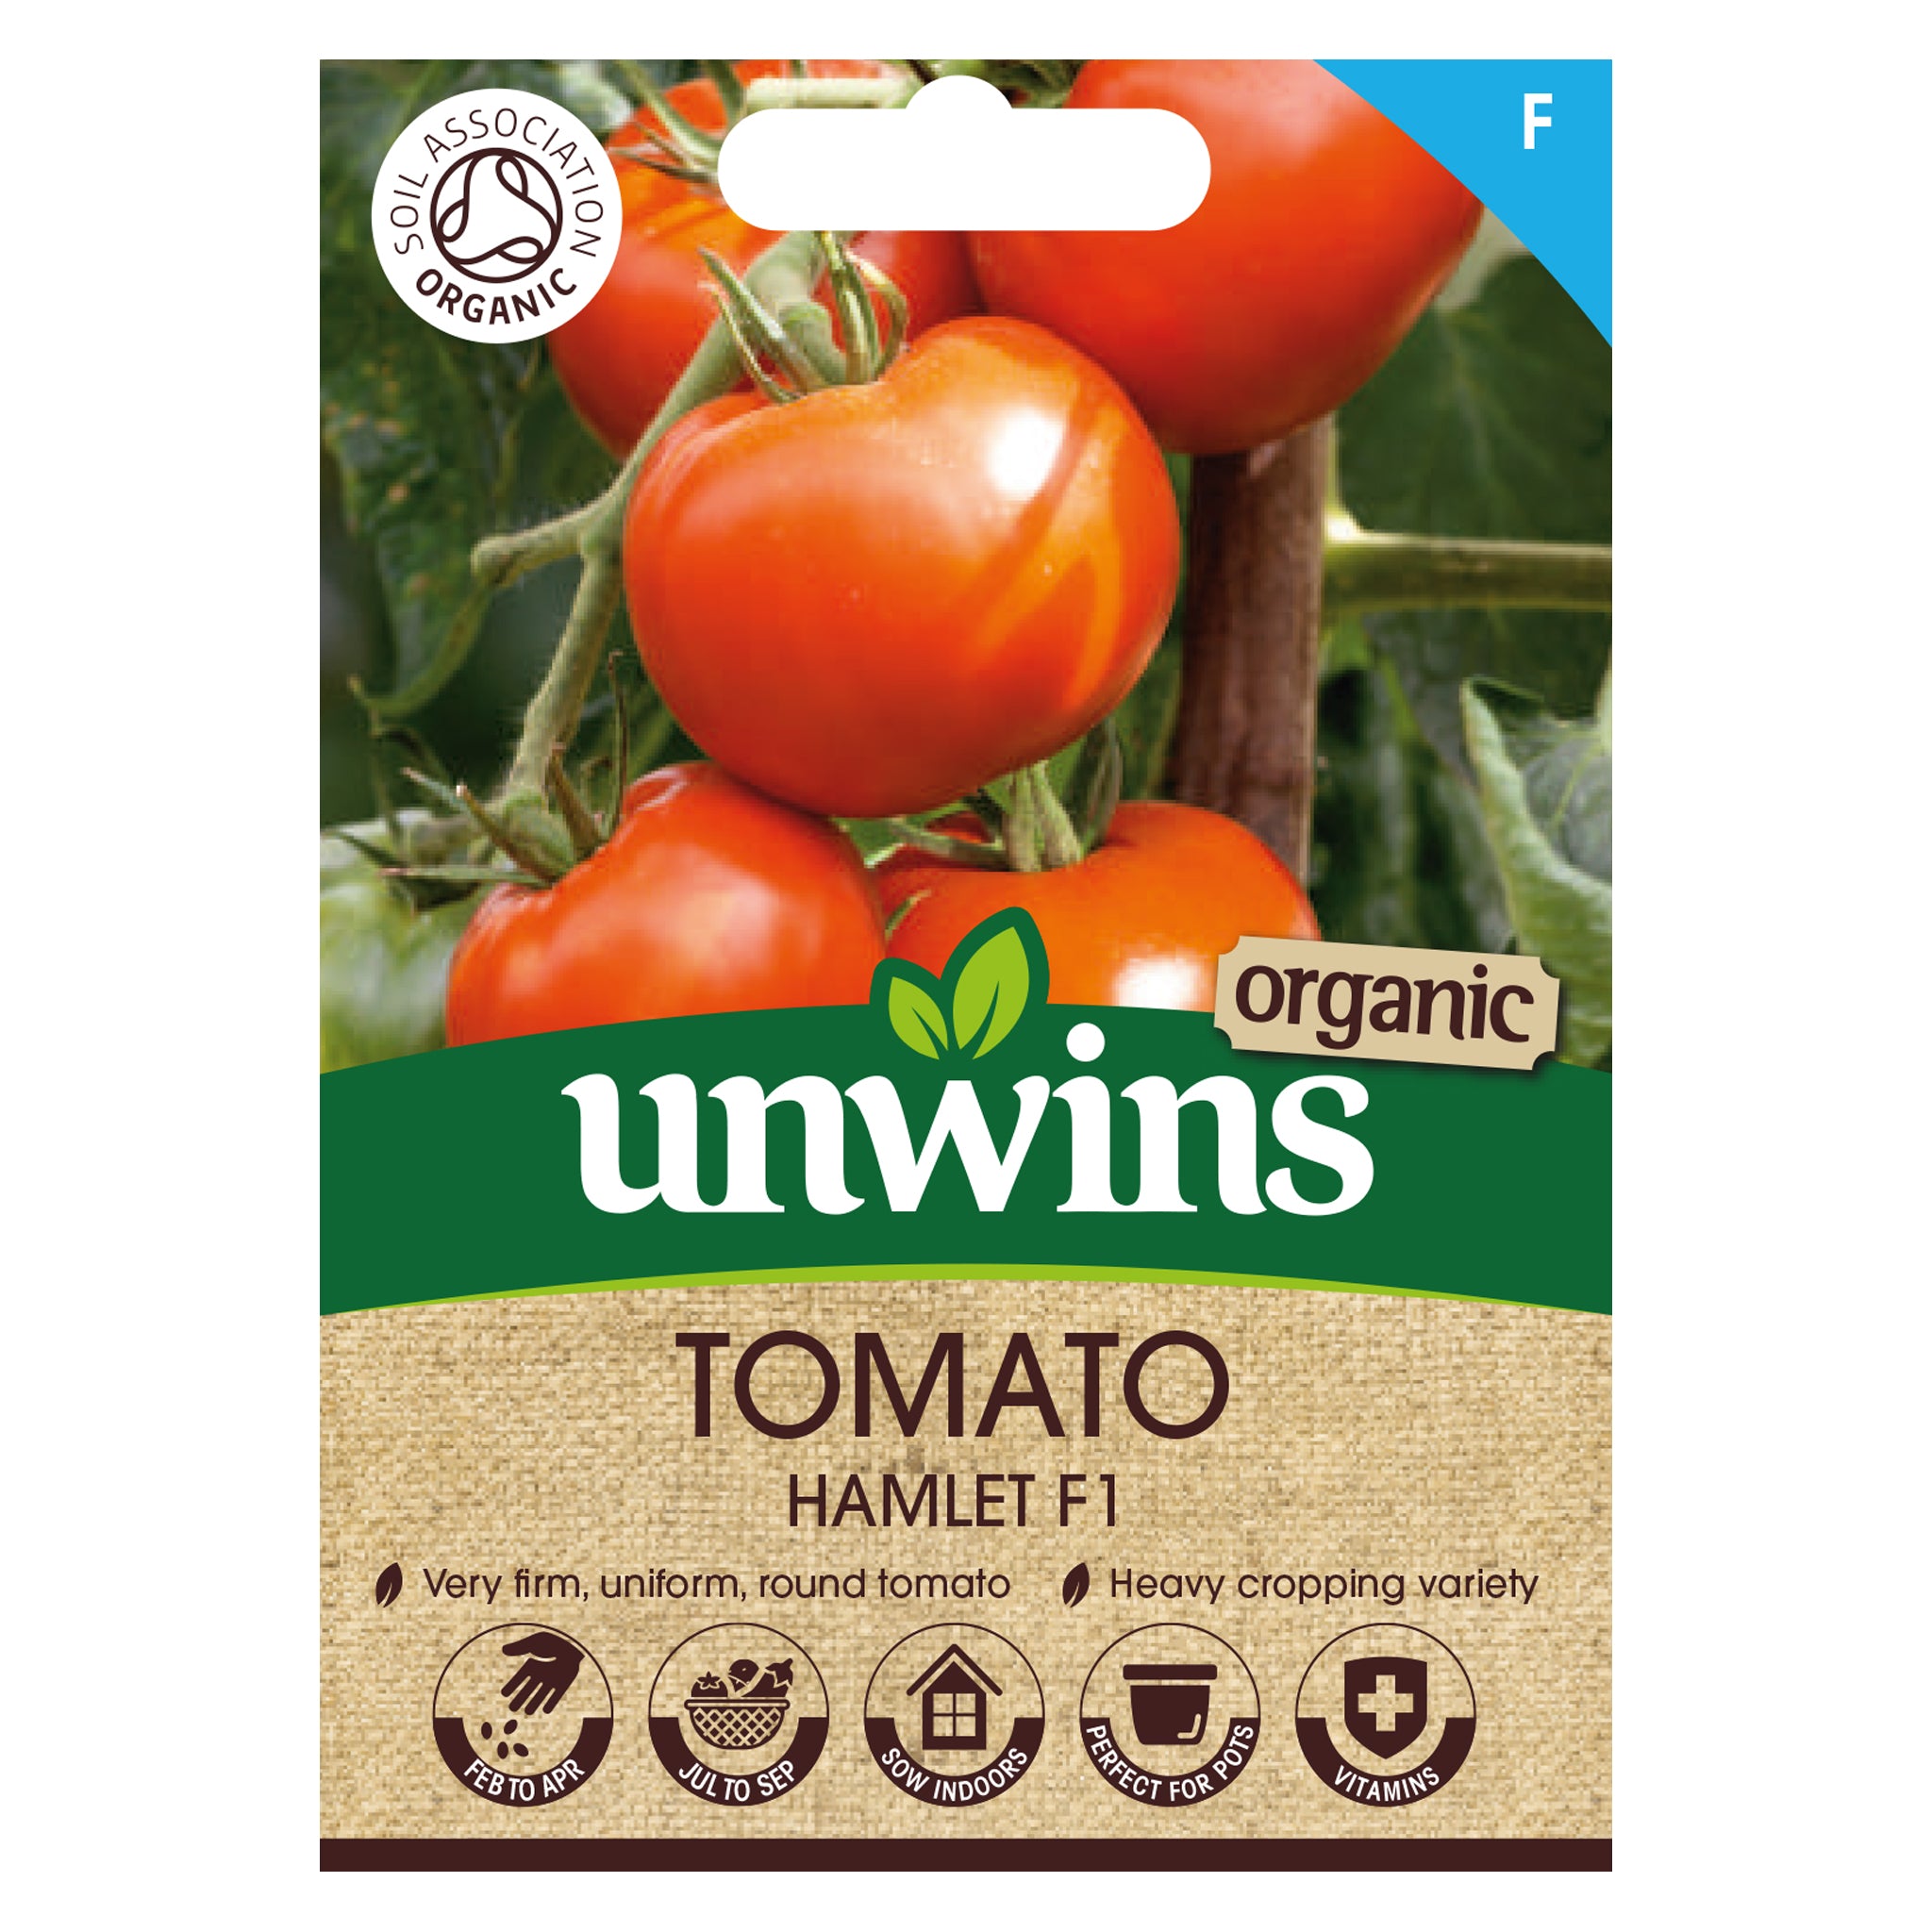 Unwins Organic Tomato Hamlet F1 Seeds